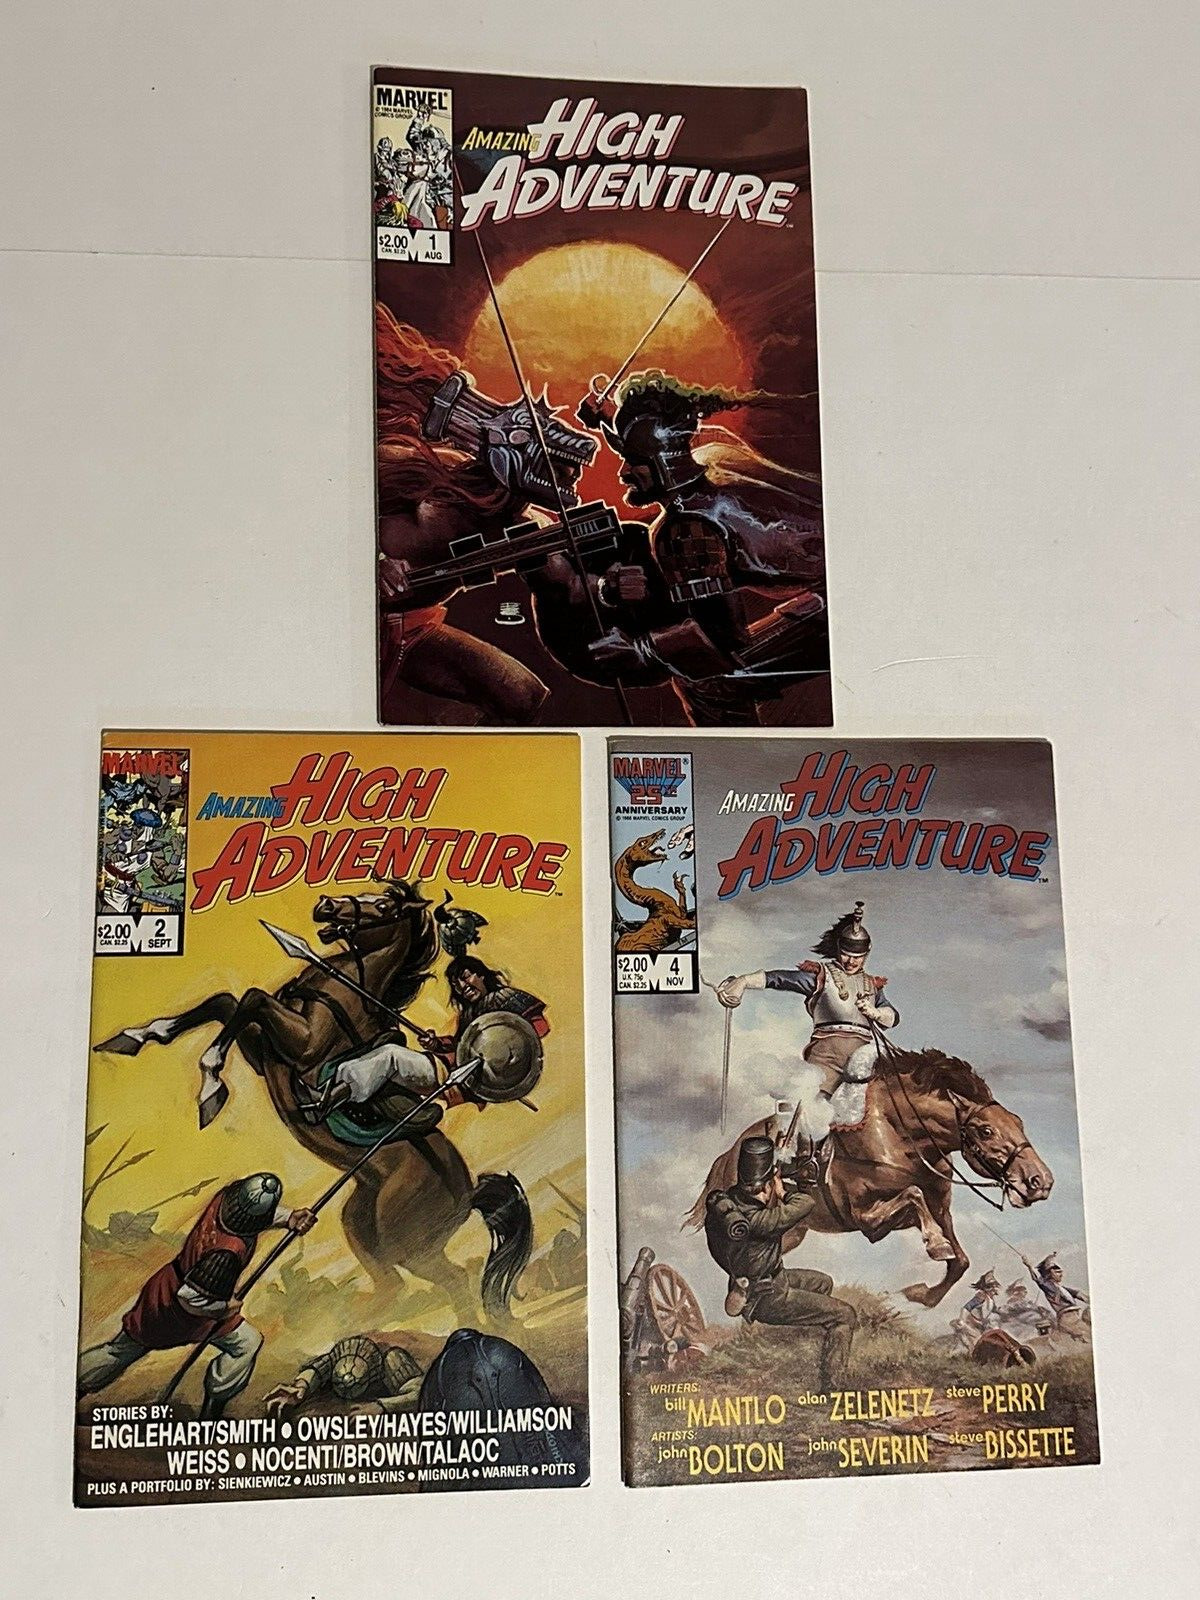 Amazing High Adventure Vol 1 #1,2,4 August 1984 Marvel Comics MCU Copper Age